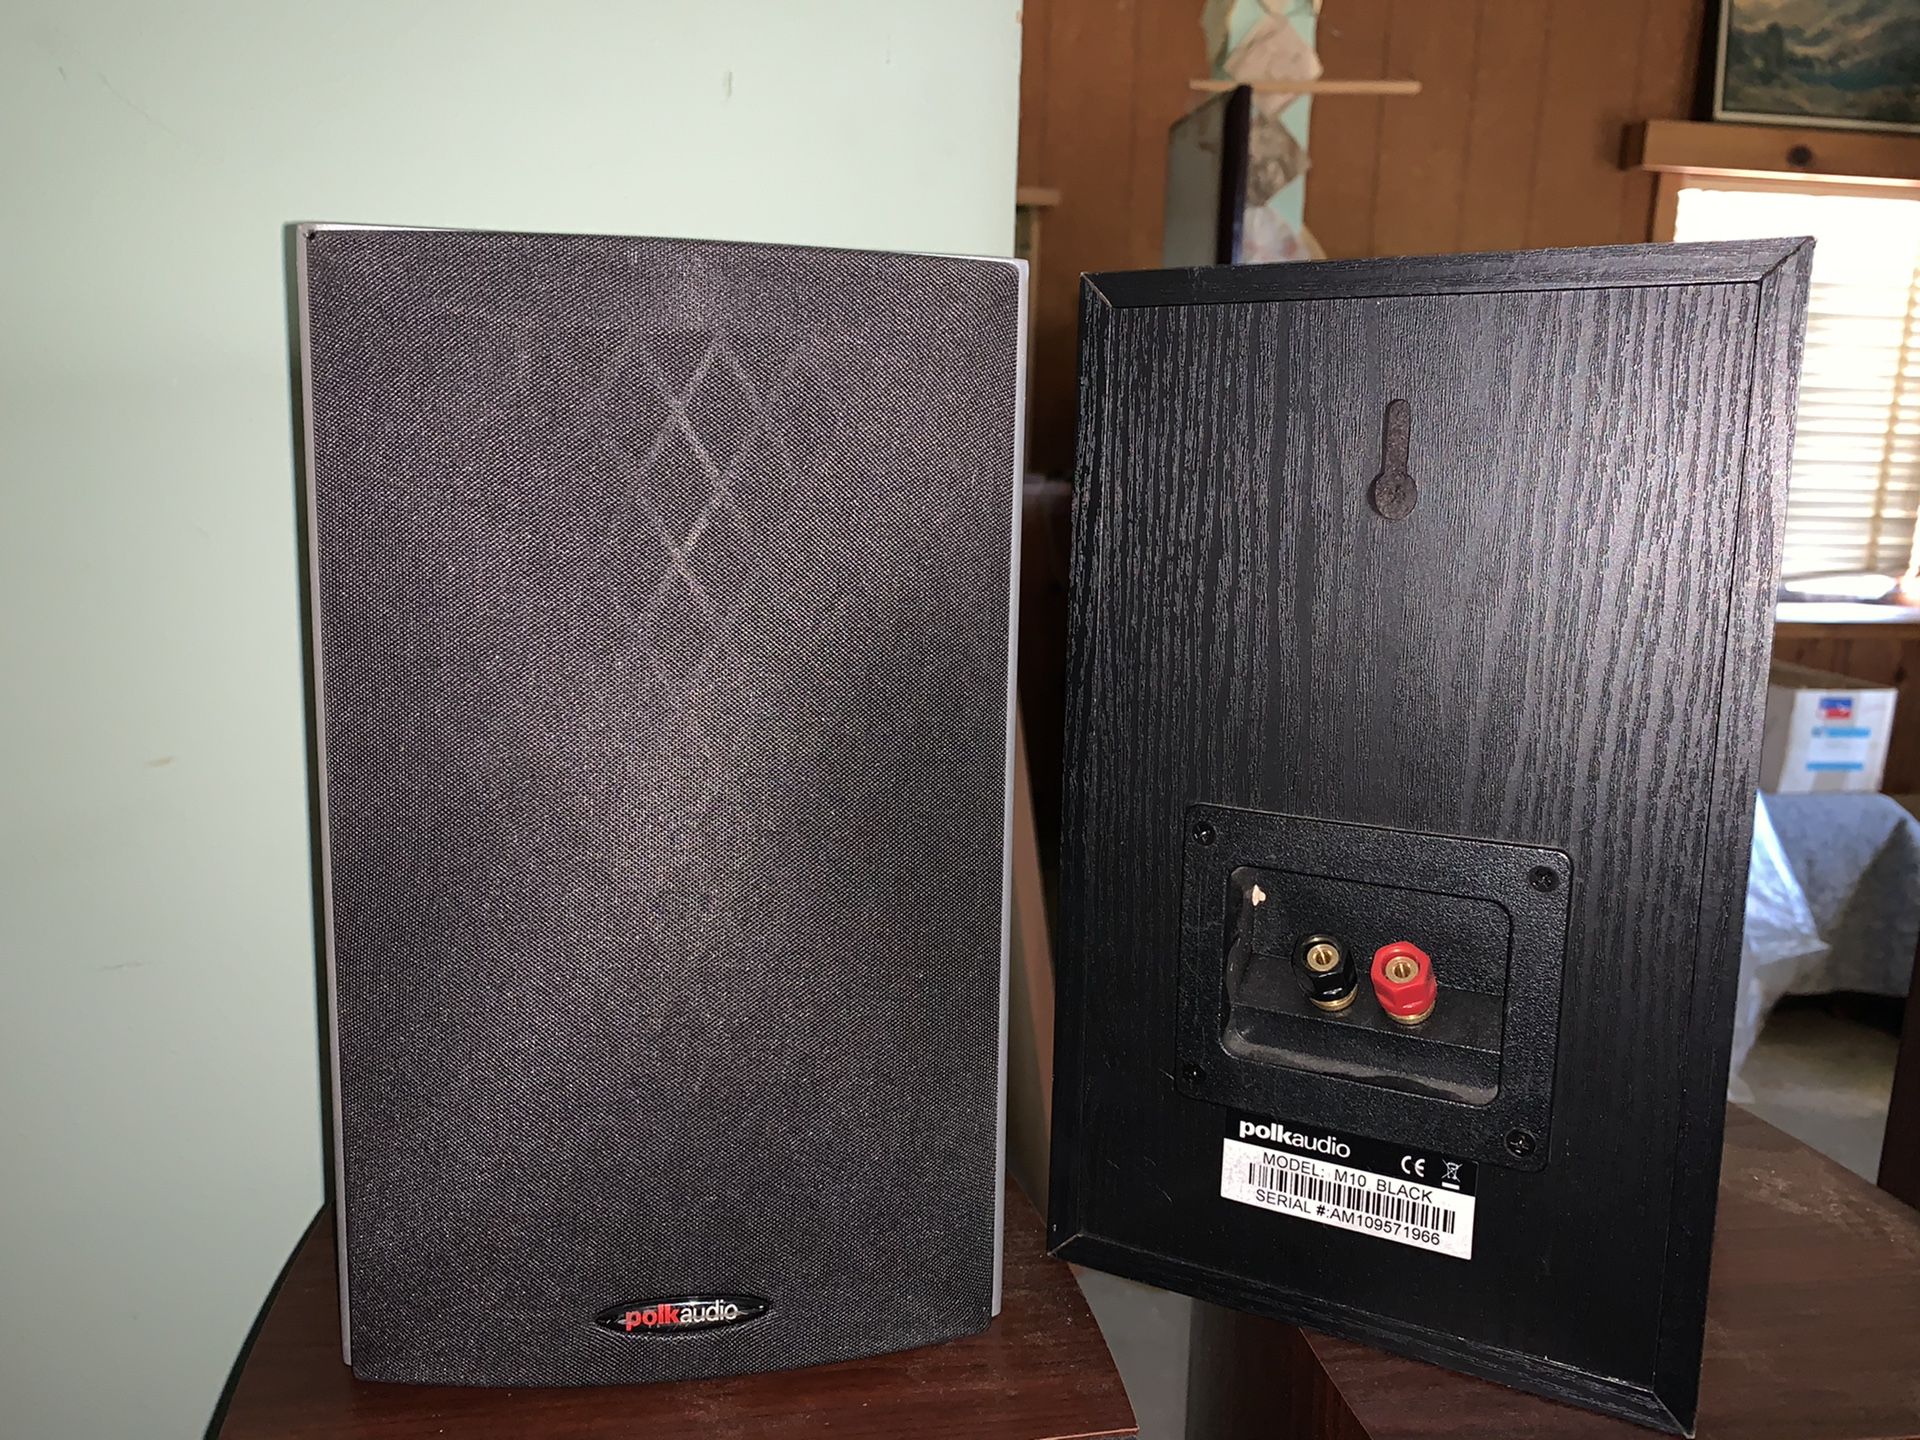 Polk audio speakers